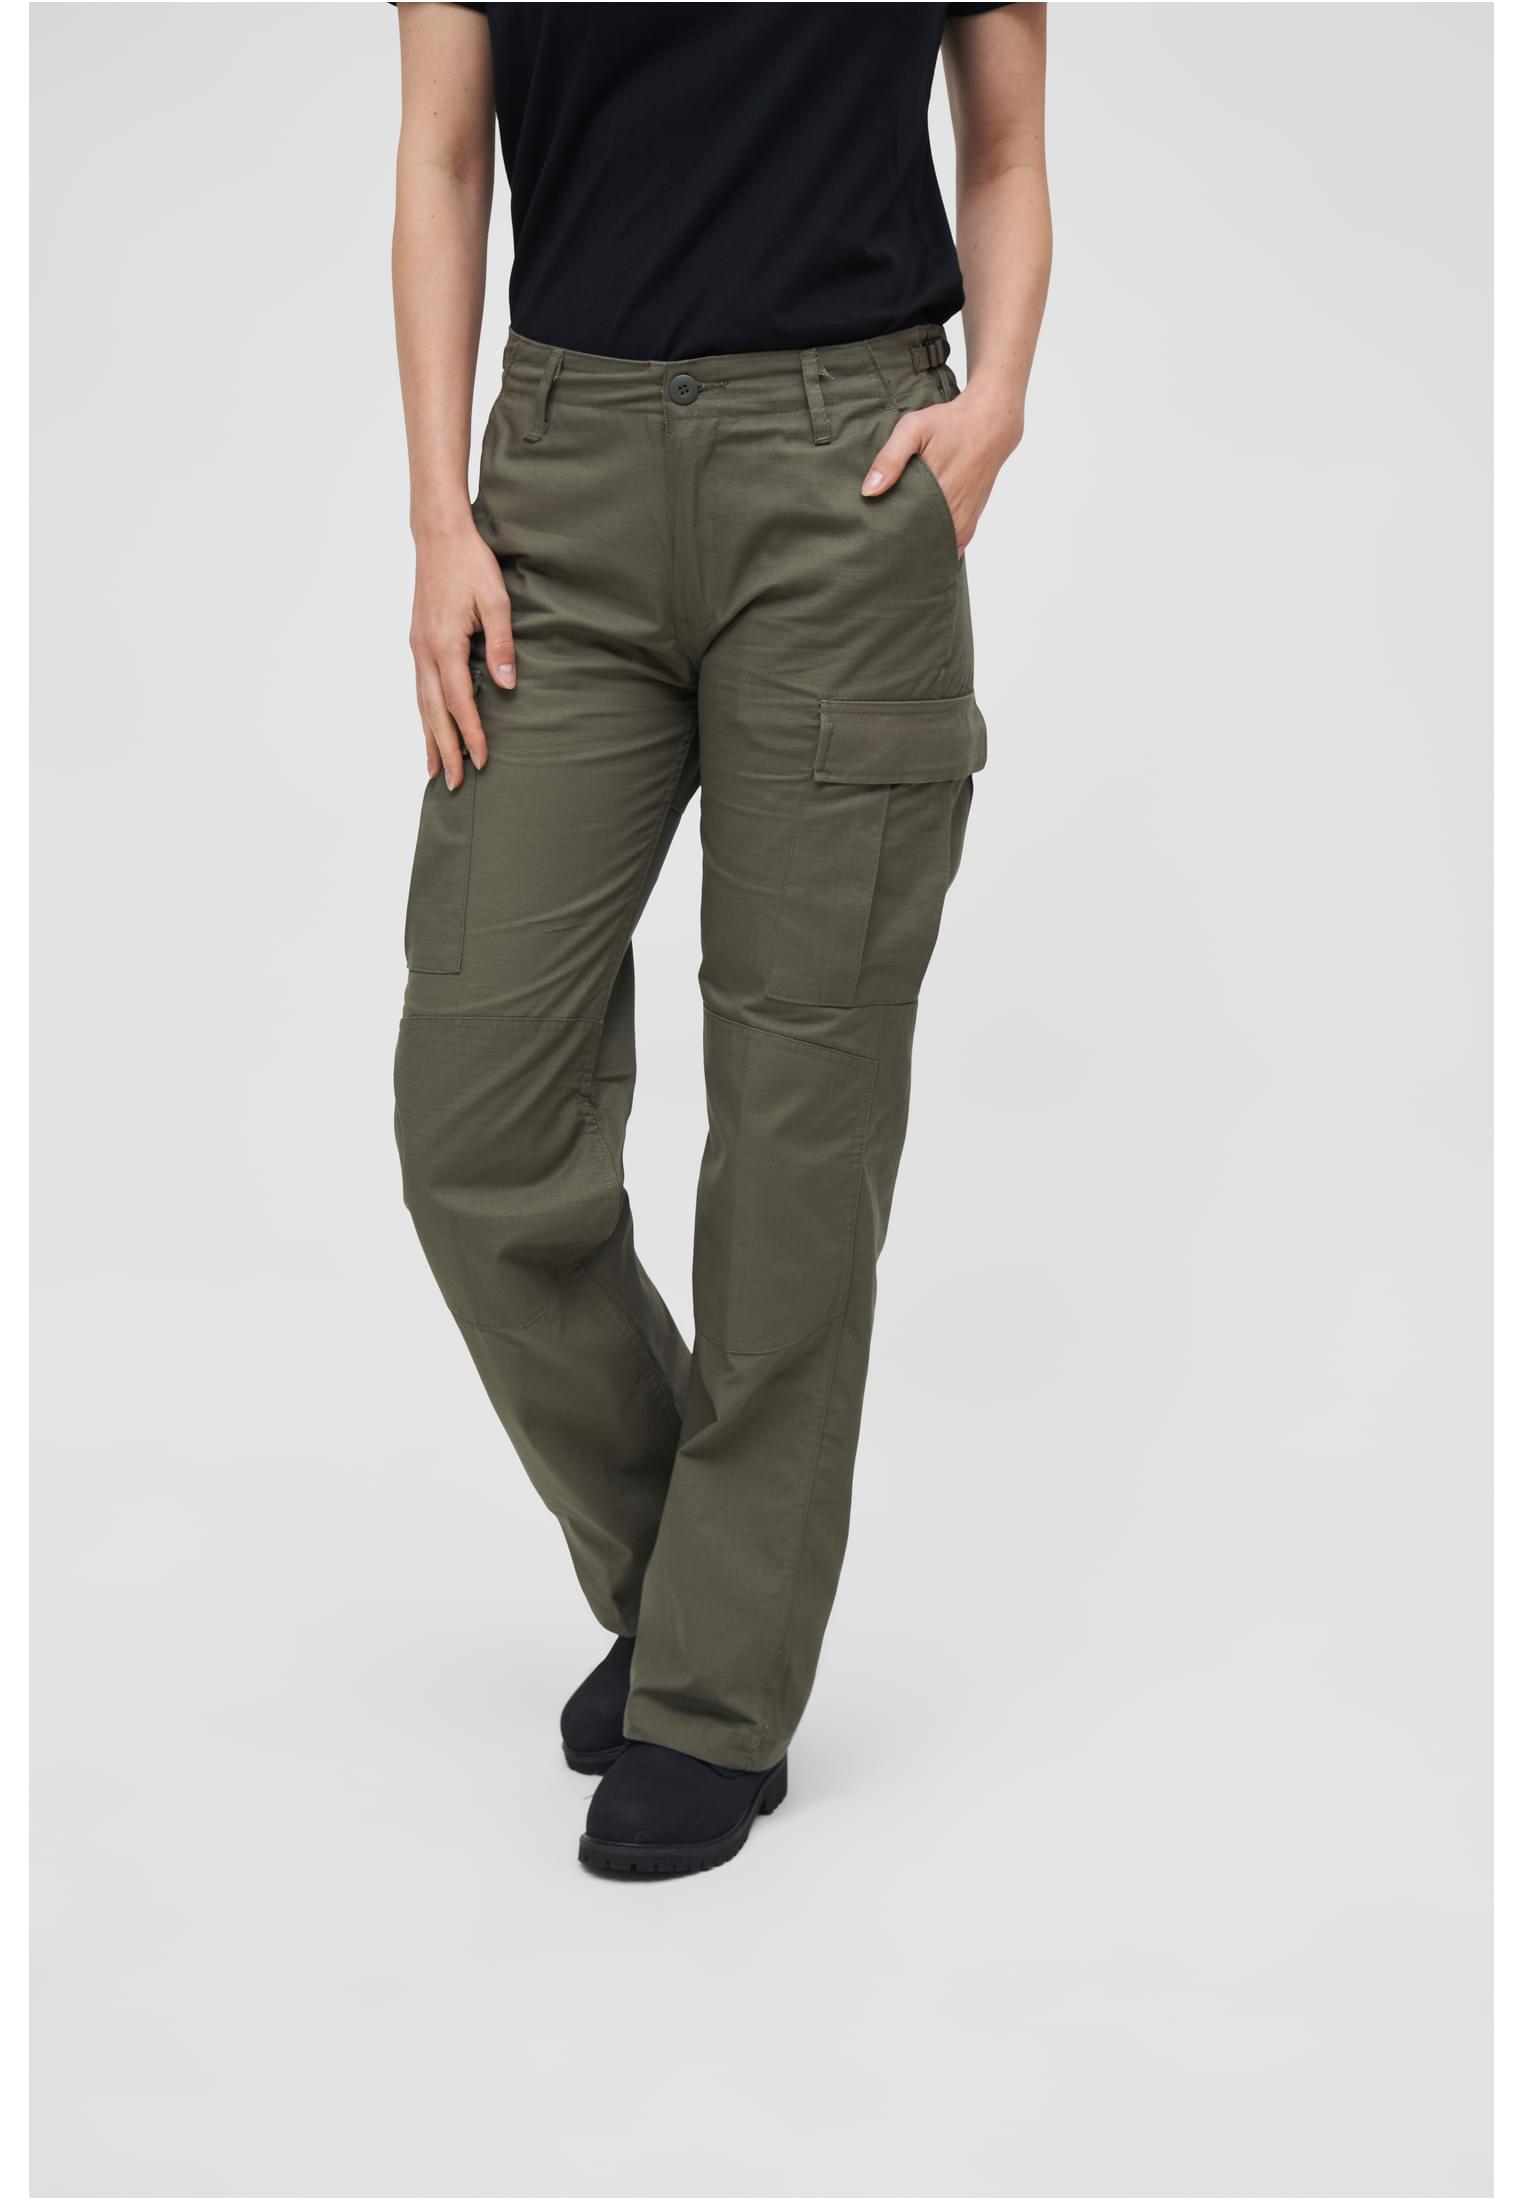 Jacken Ladies BDU Ripstop Trouser in Farbe olive